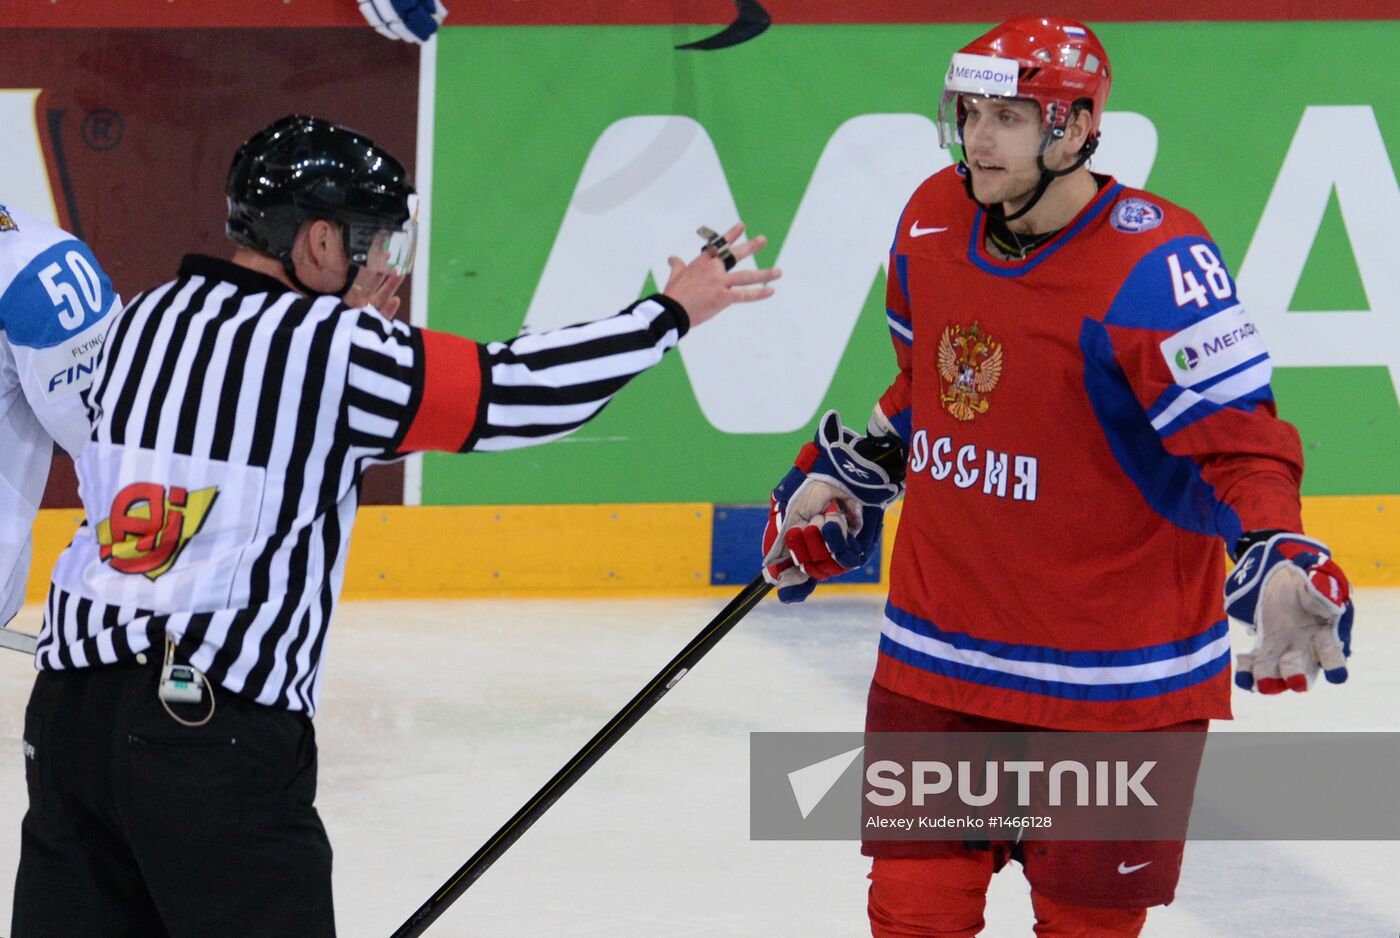 2013 Men's World Ice Hockey Championships. Russia vs. Finland